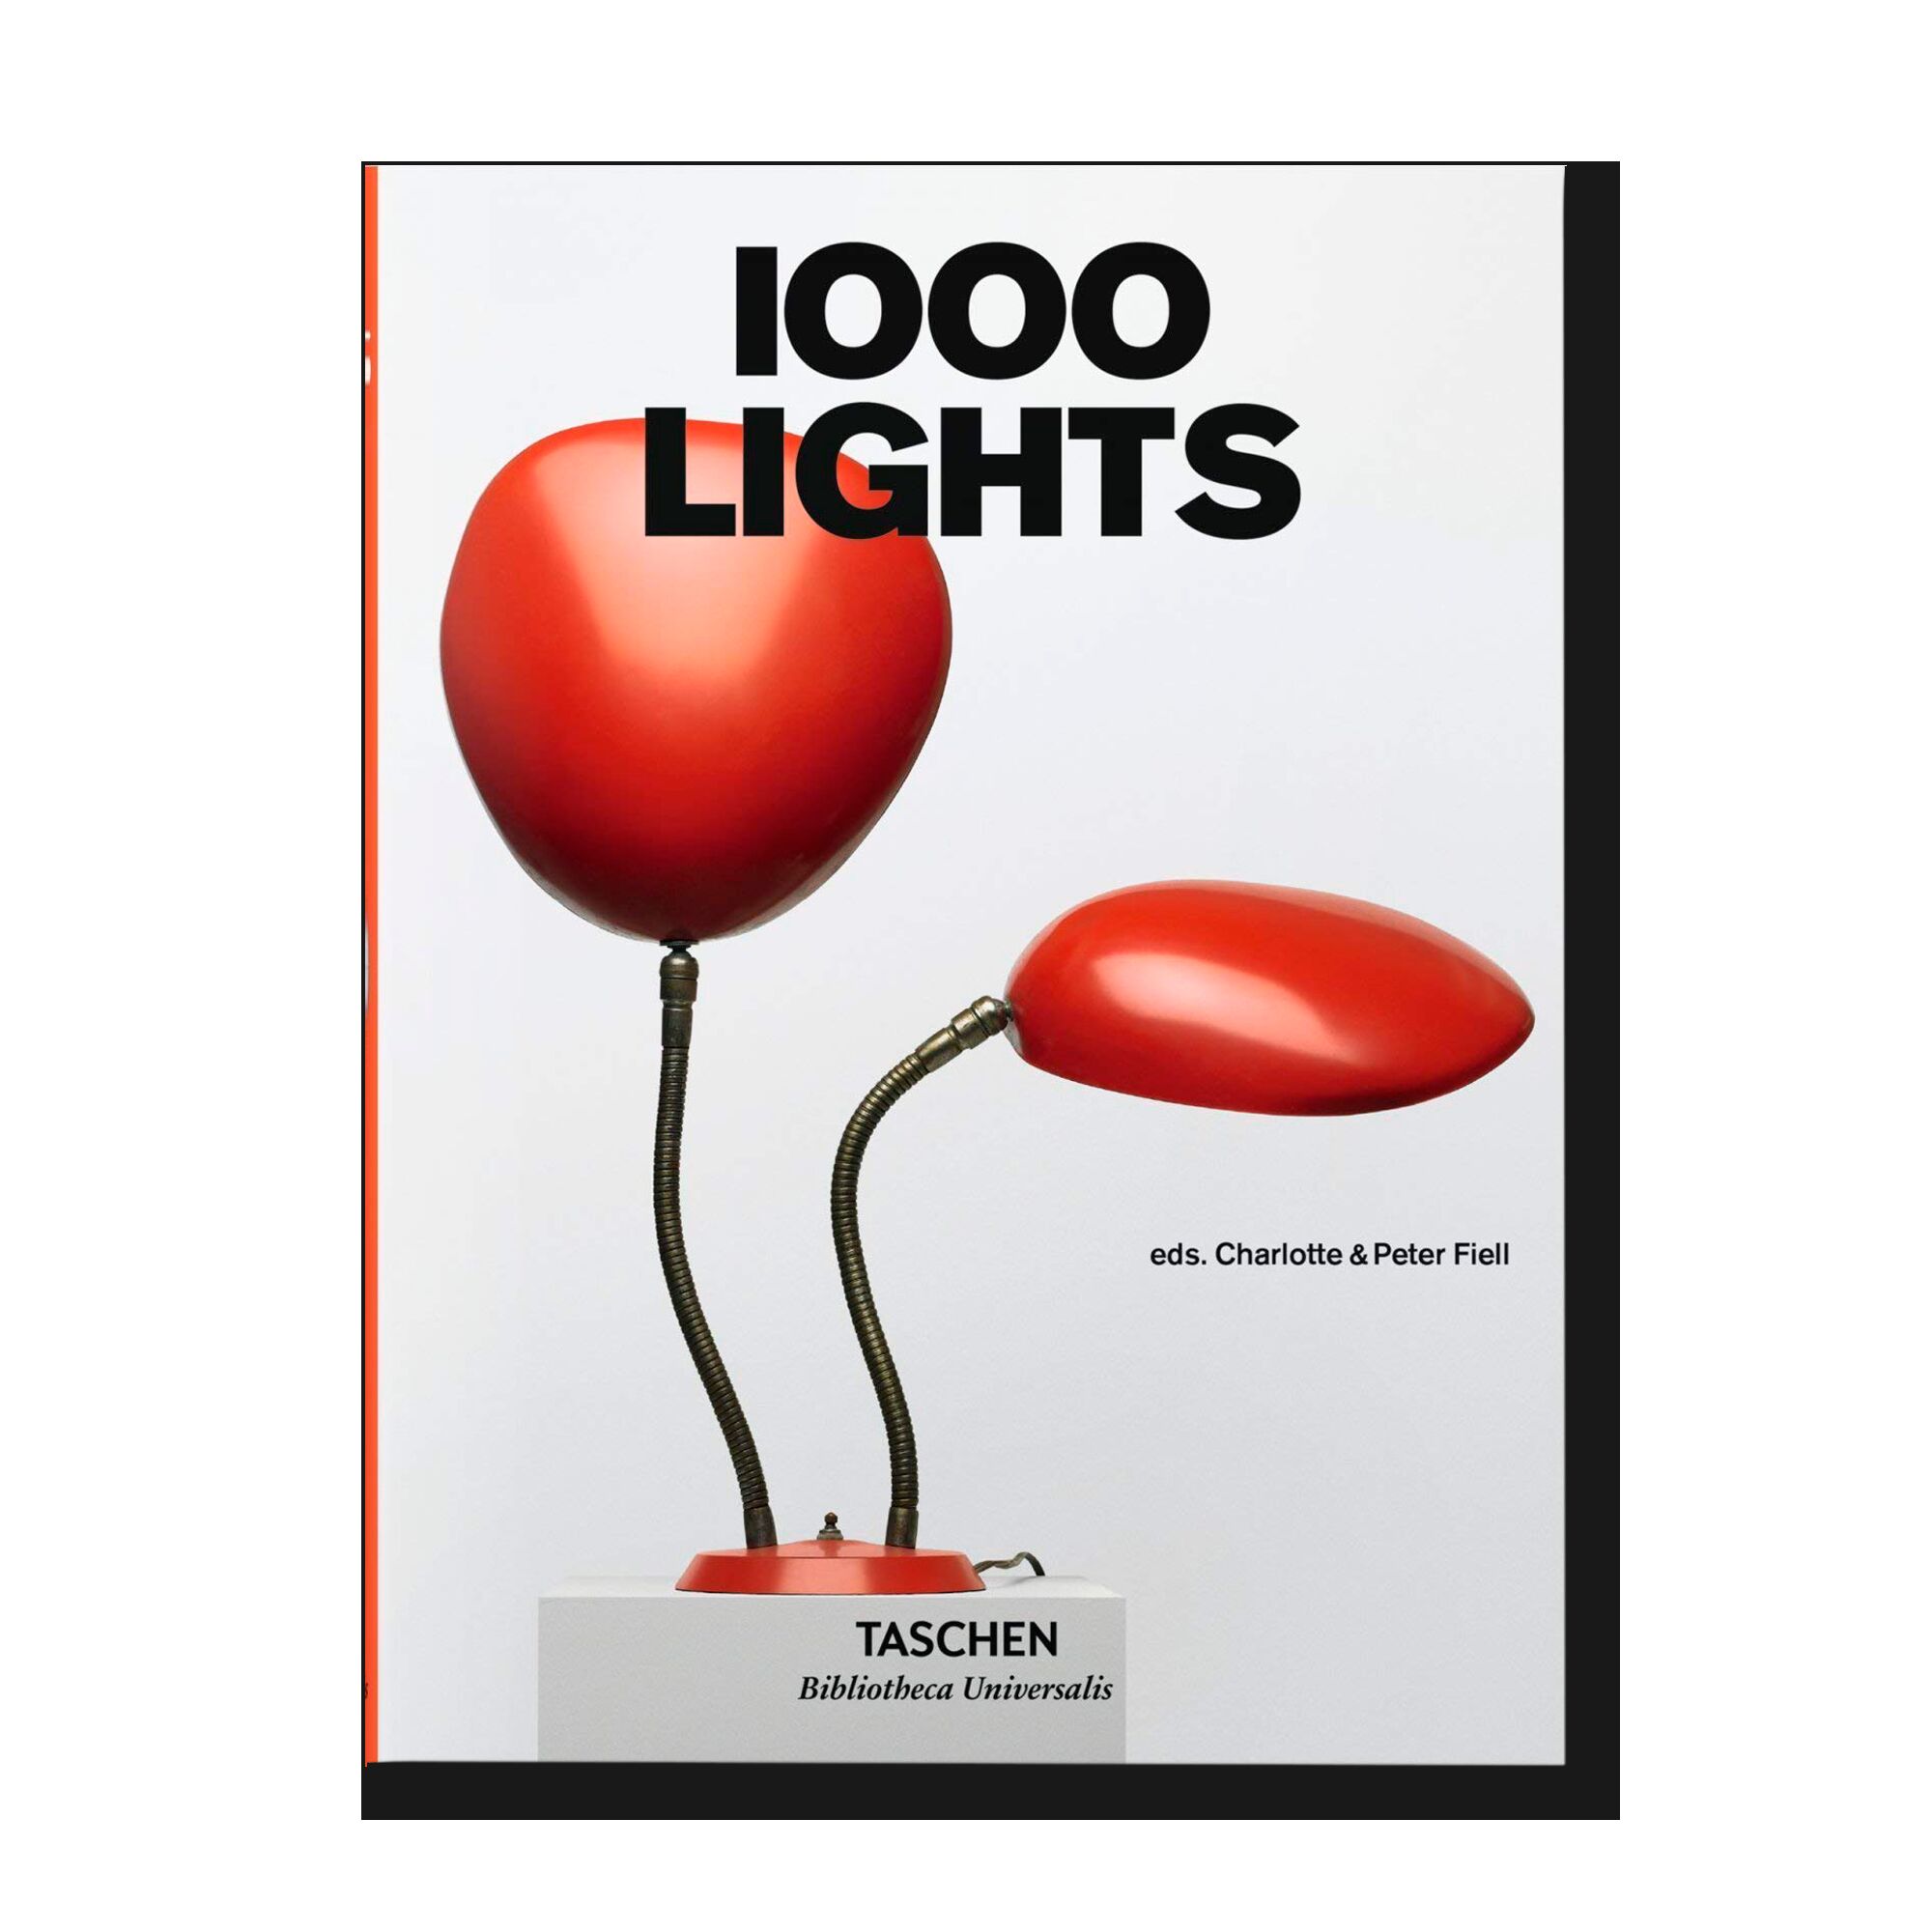 1000 Lights (Bibliotheca Universalis)